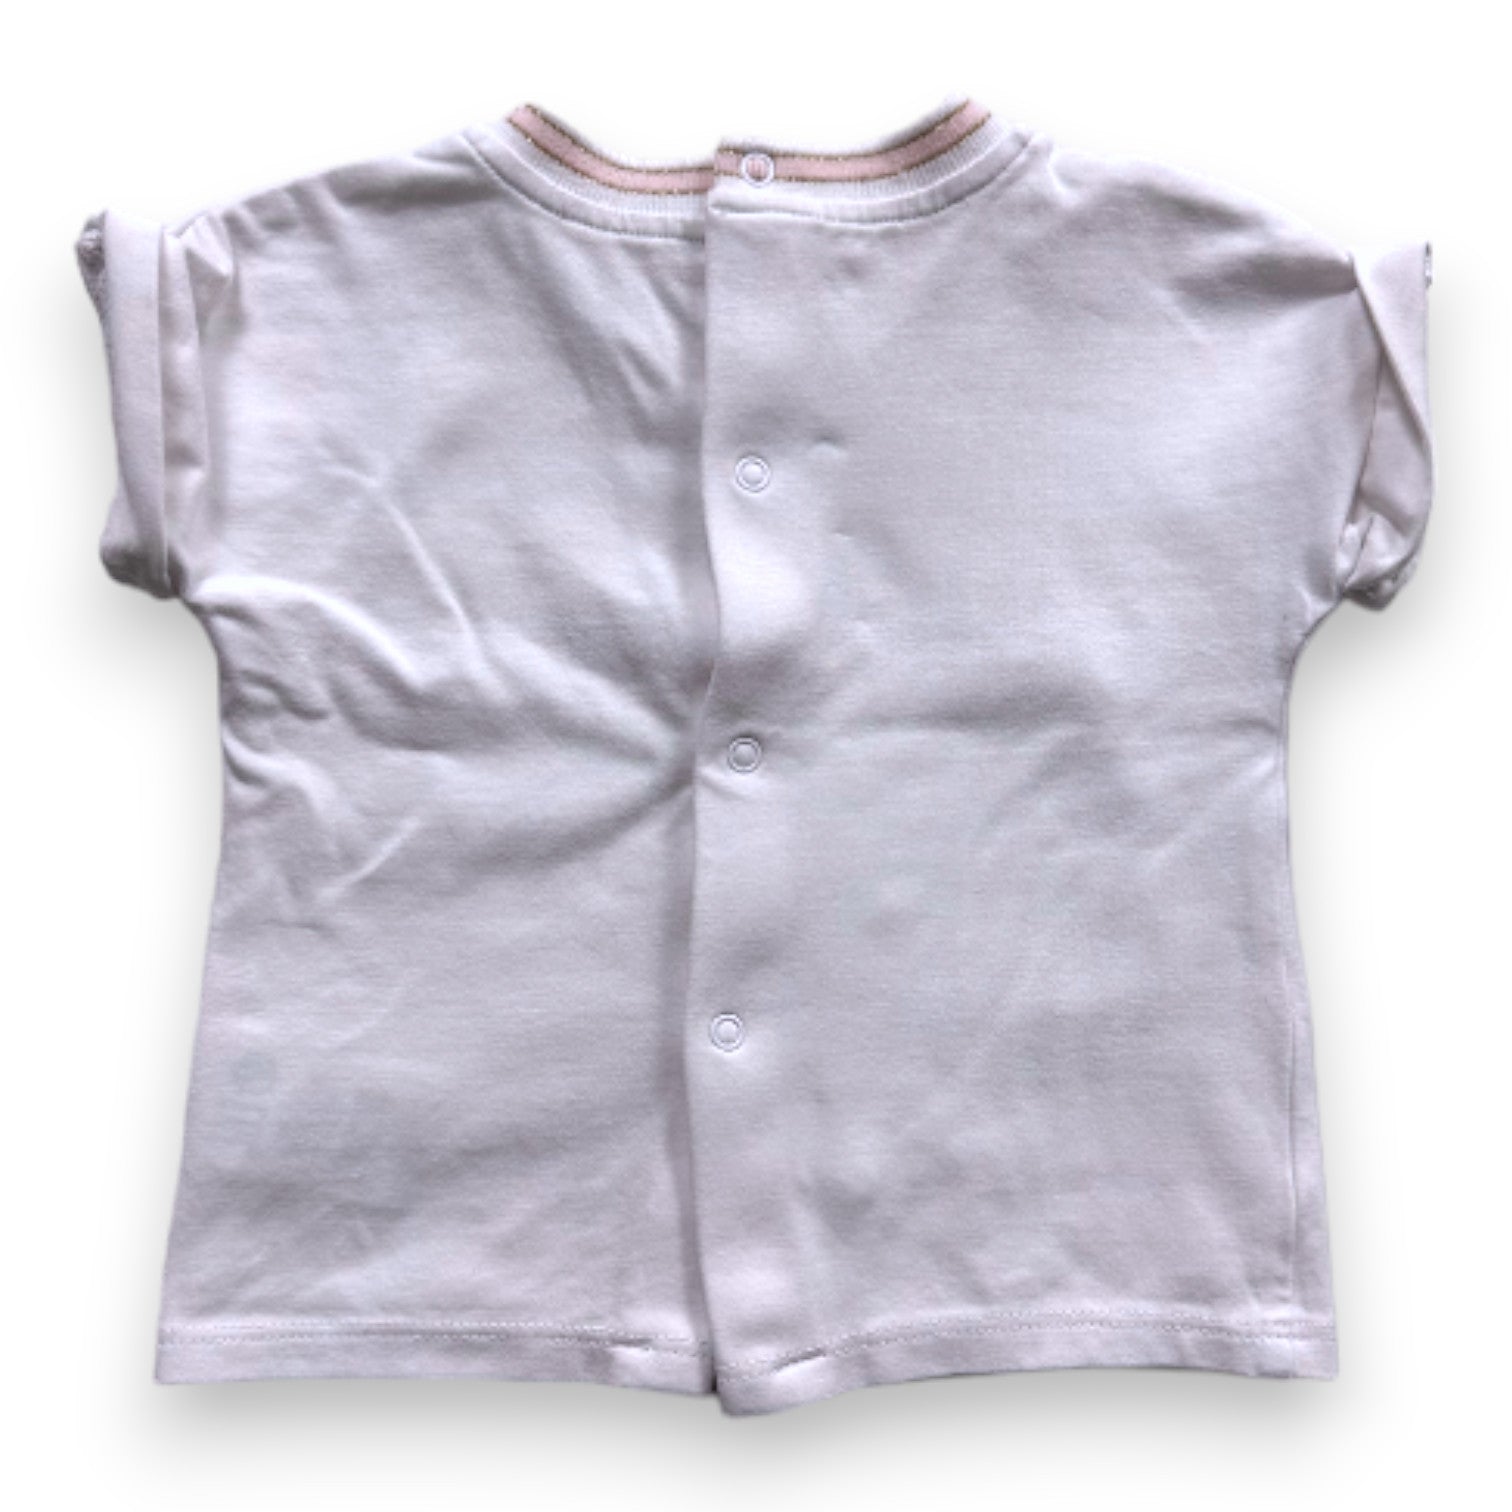 HUGO BOSS - T-shirt blanc avec imprimé - 6 mois